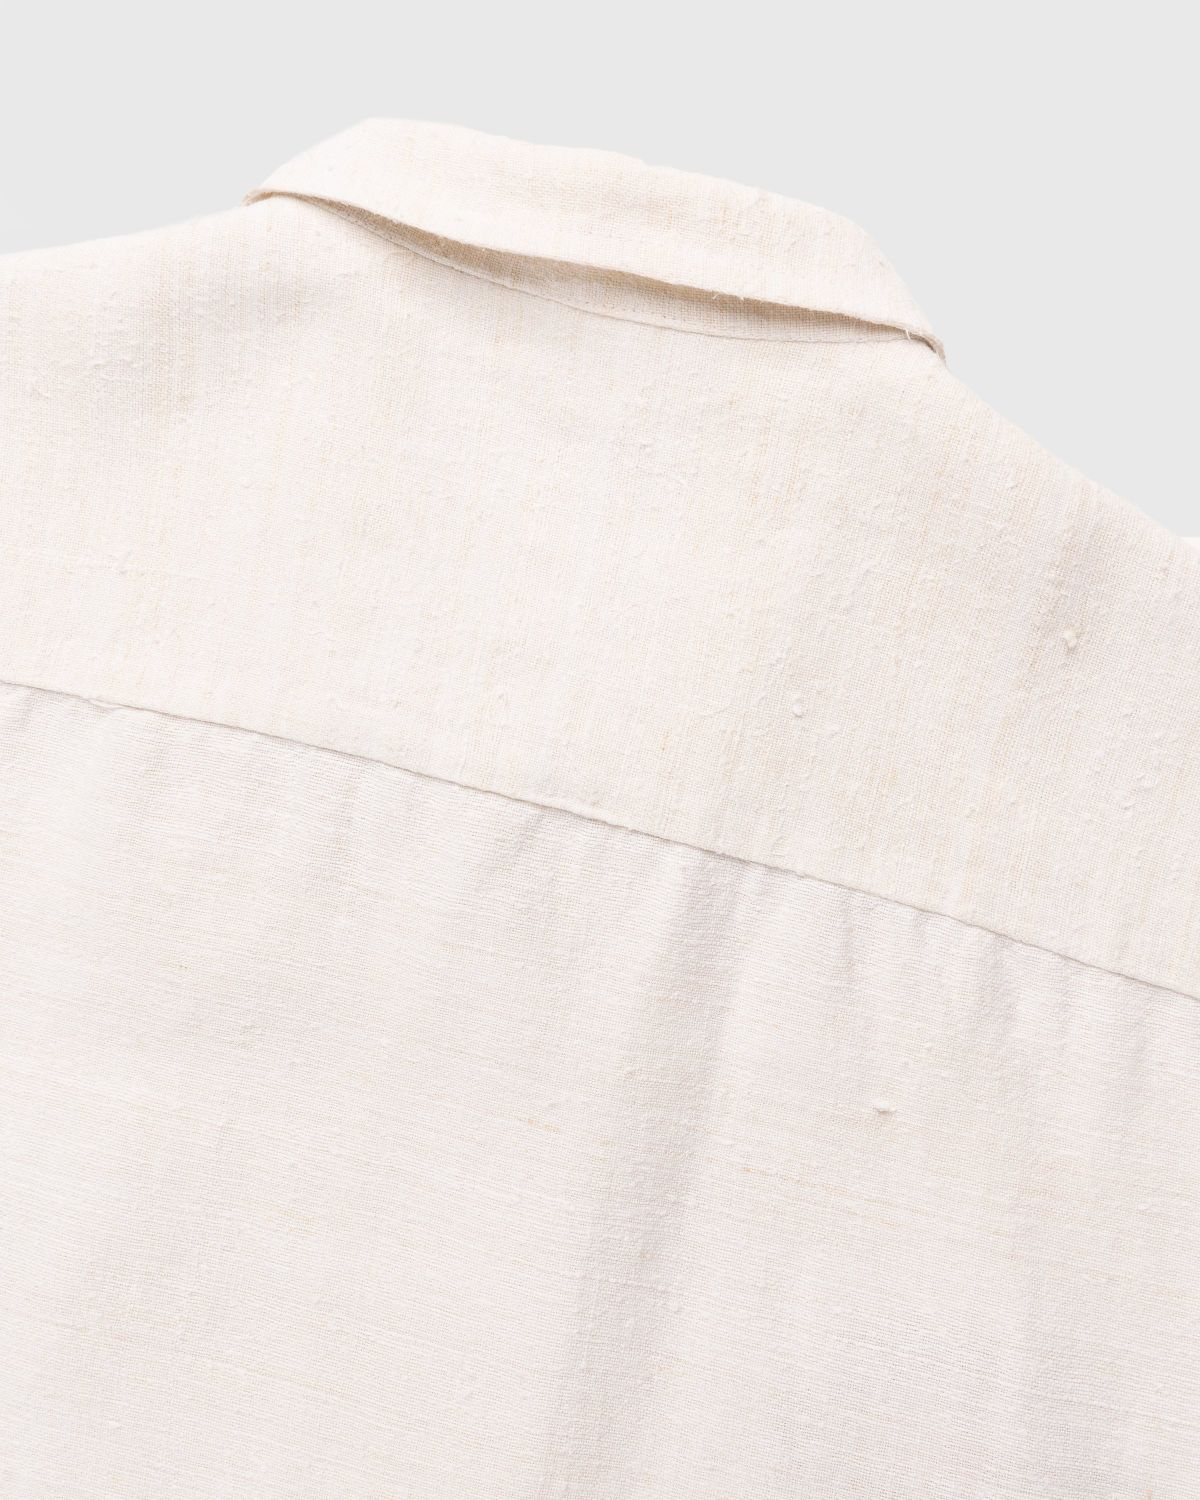 Diomene by Damir Doma – Embroidered Vacation Shirt Cream - Shortsleeve Shirts - White - Image 3